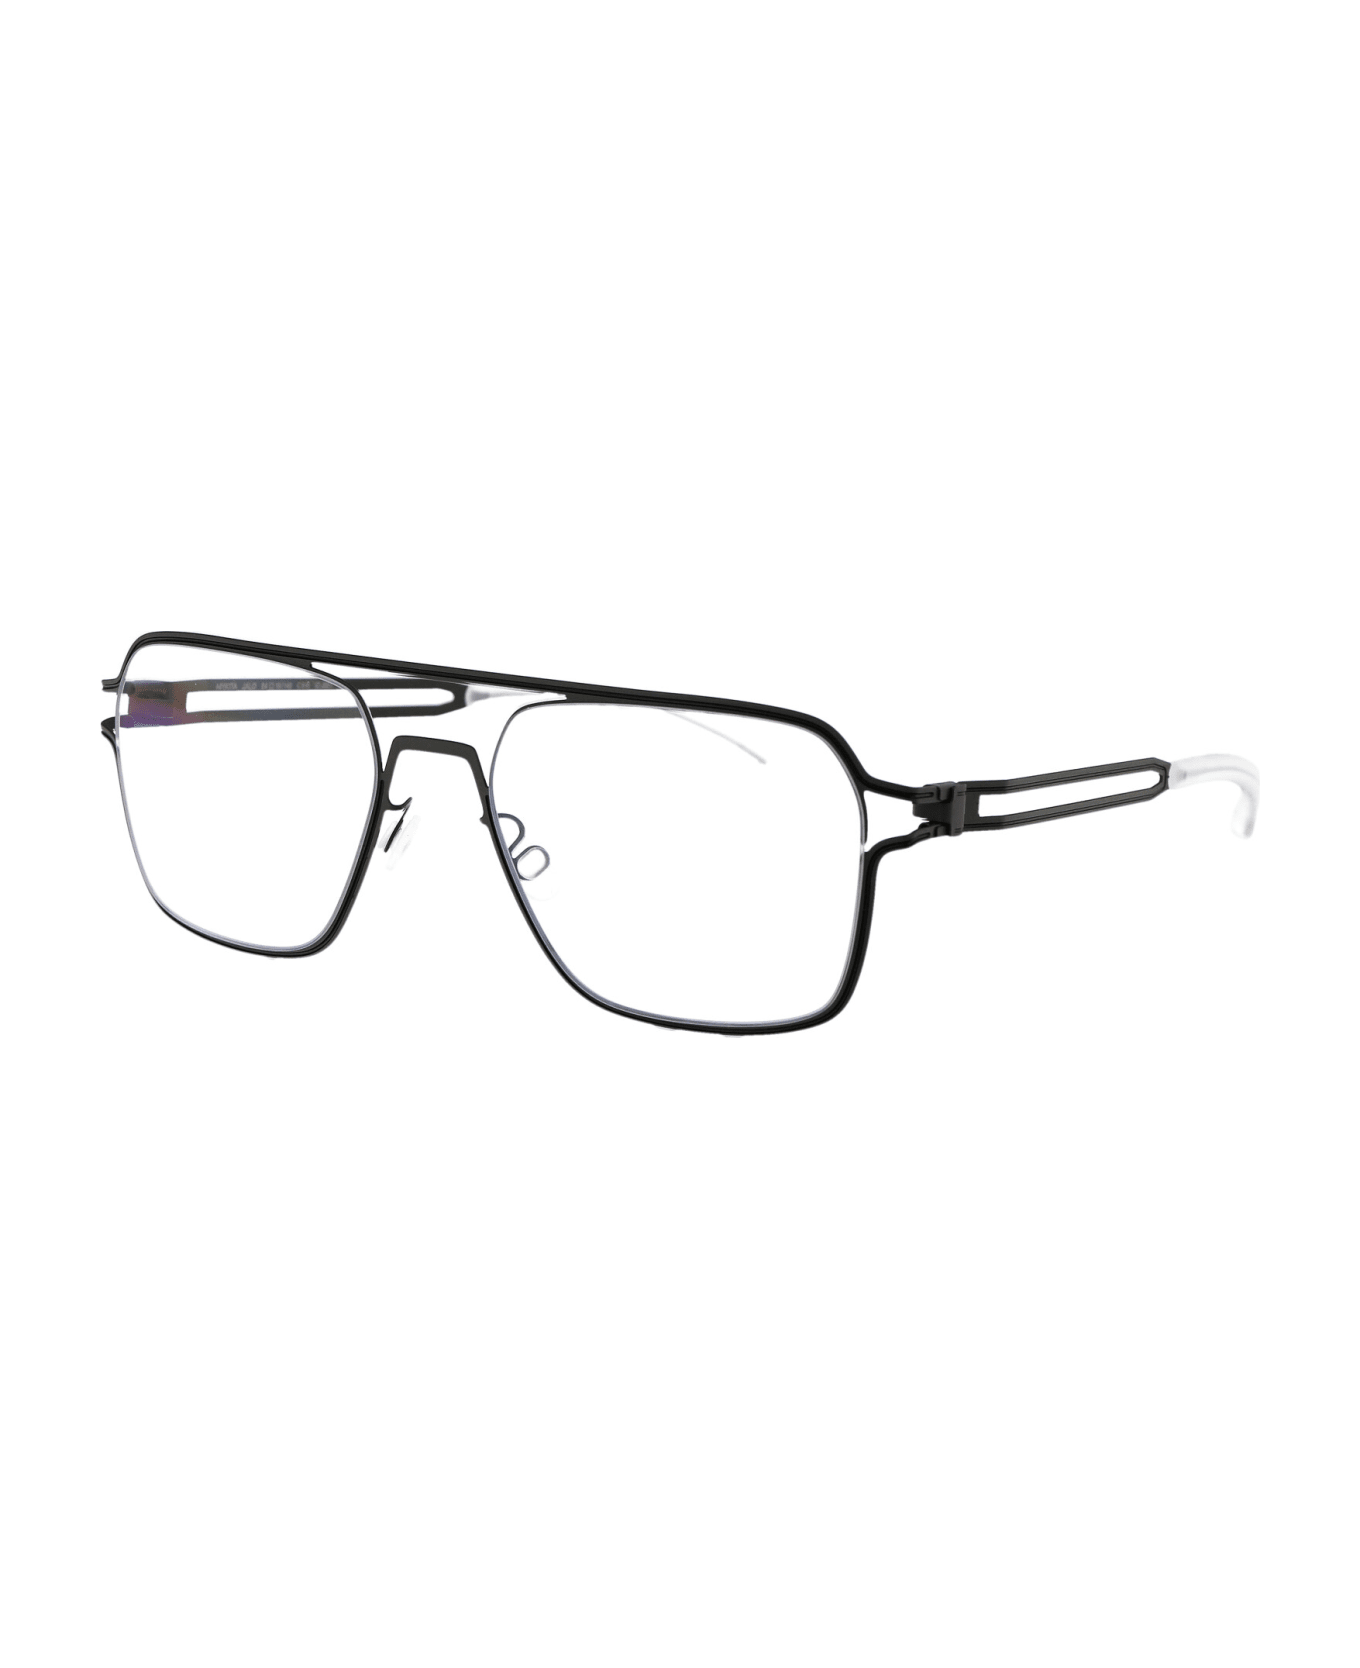 Mykita Jalo Glasses - 515 Storm Grey/Black Clear